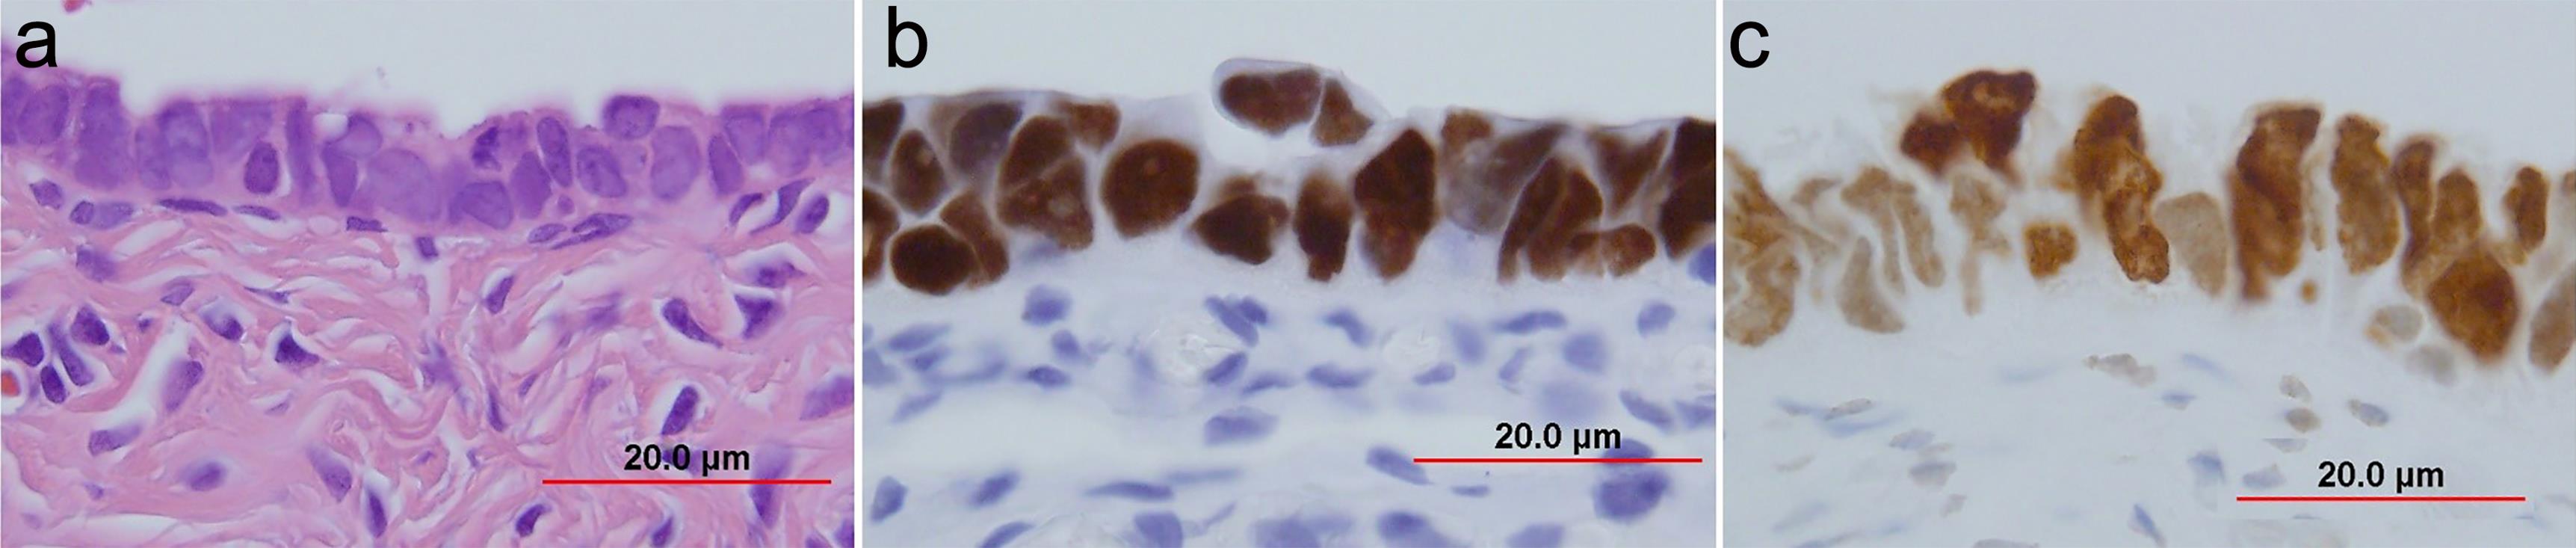 HMGA2 expression in serous tubal intraepithelial carcinoma (STIC).